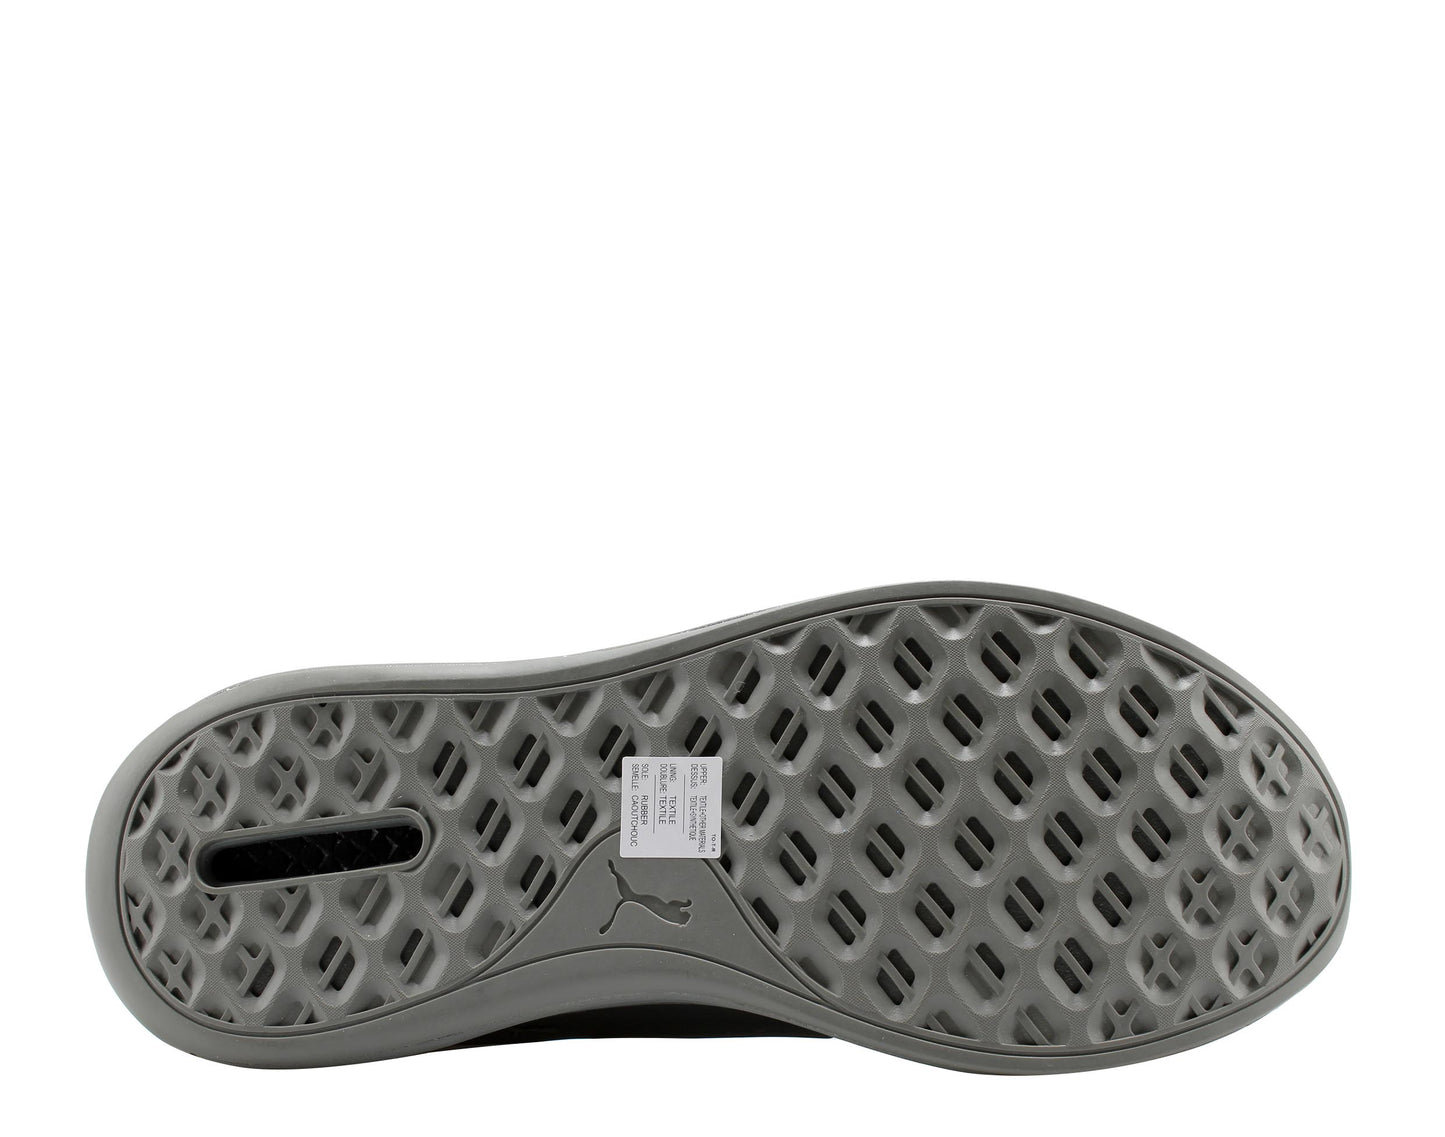 Puma IGNITE Limitless SR Quite Shade/Grey Men's Running Shoes 19048204